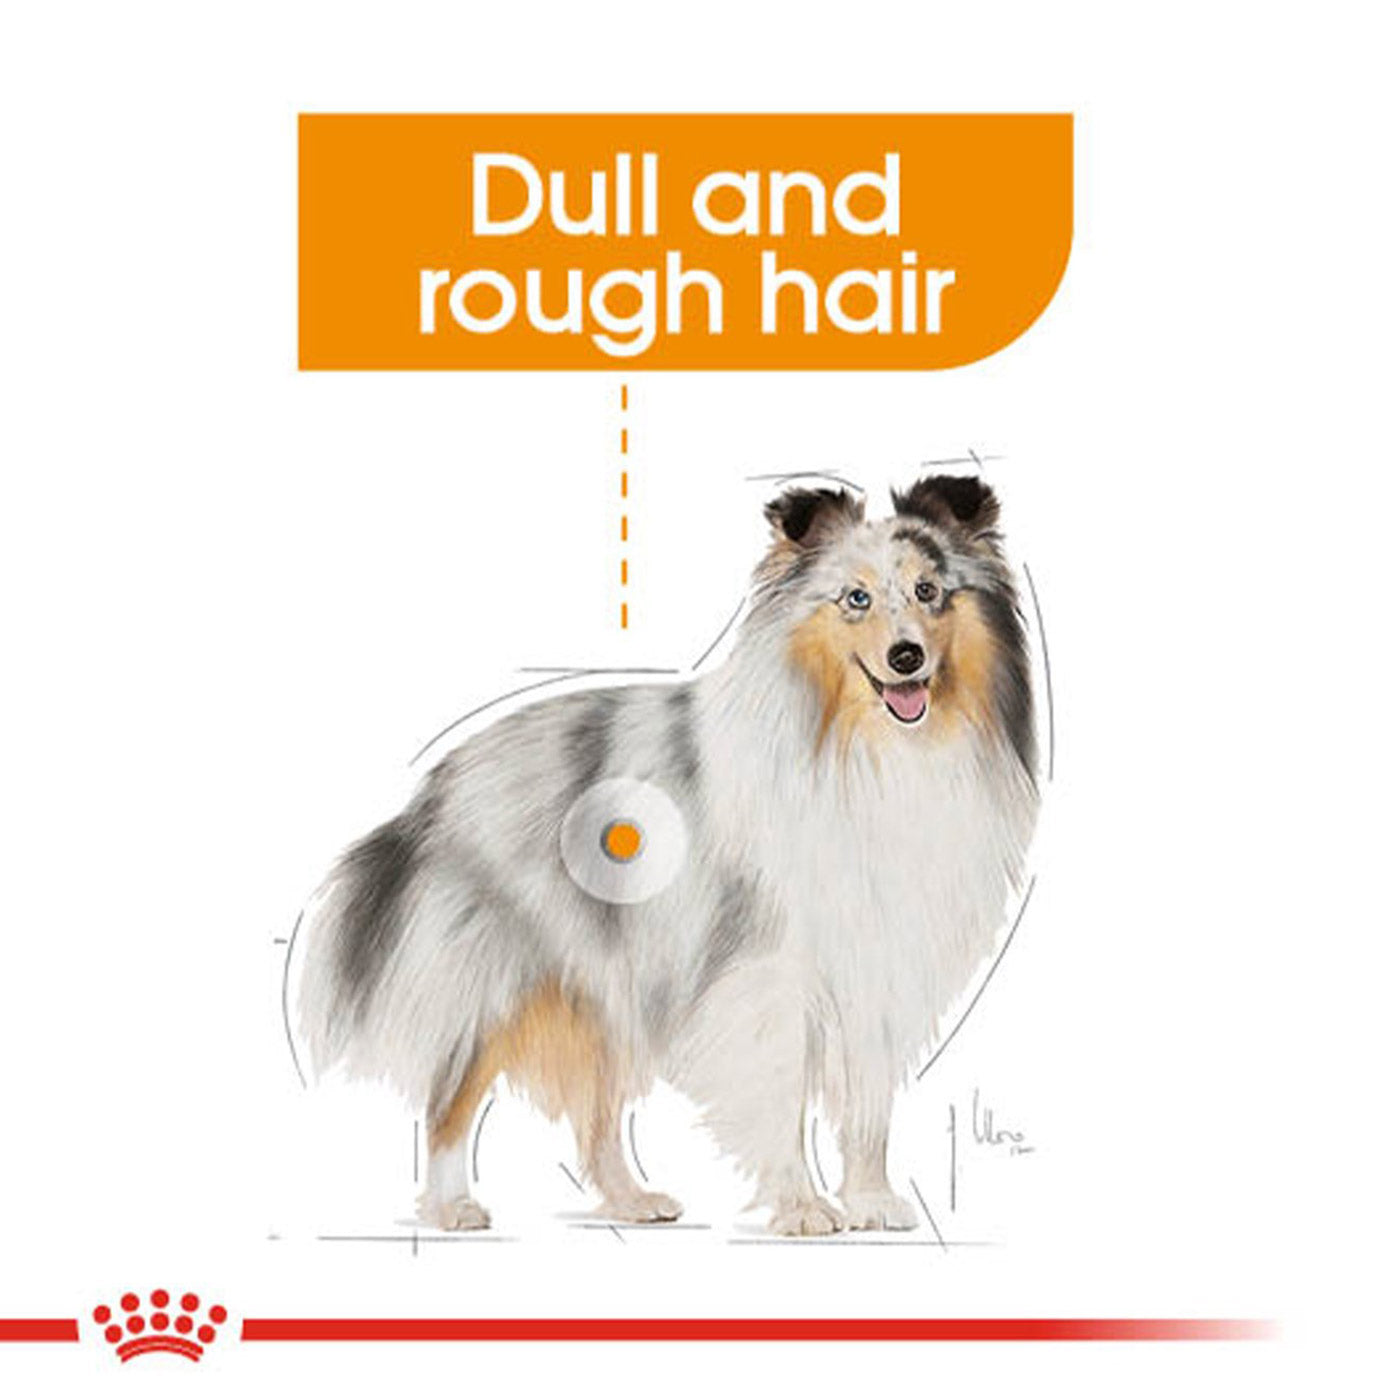 Royal Canin Coat Care Wet Adult Dog Food